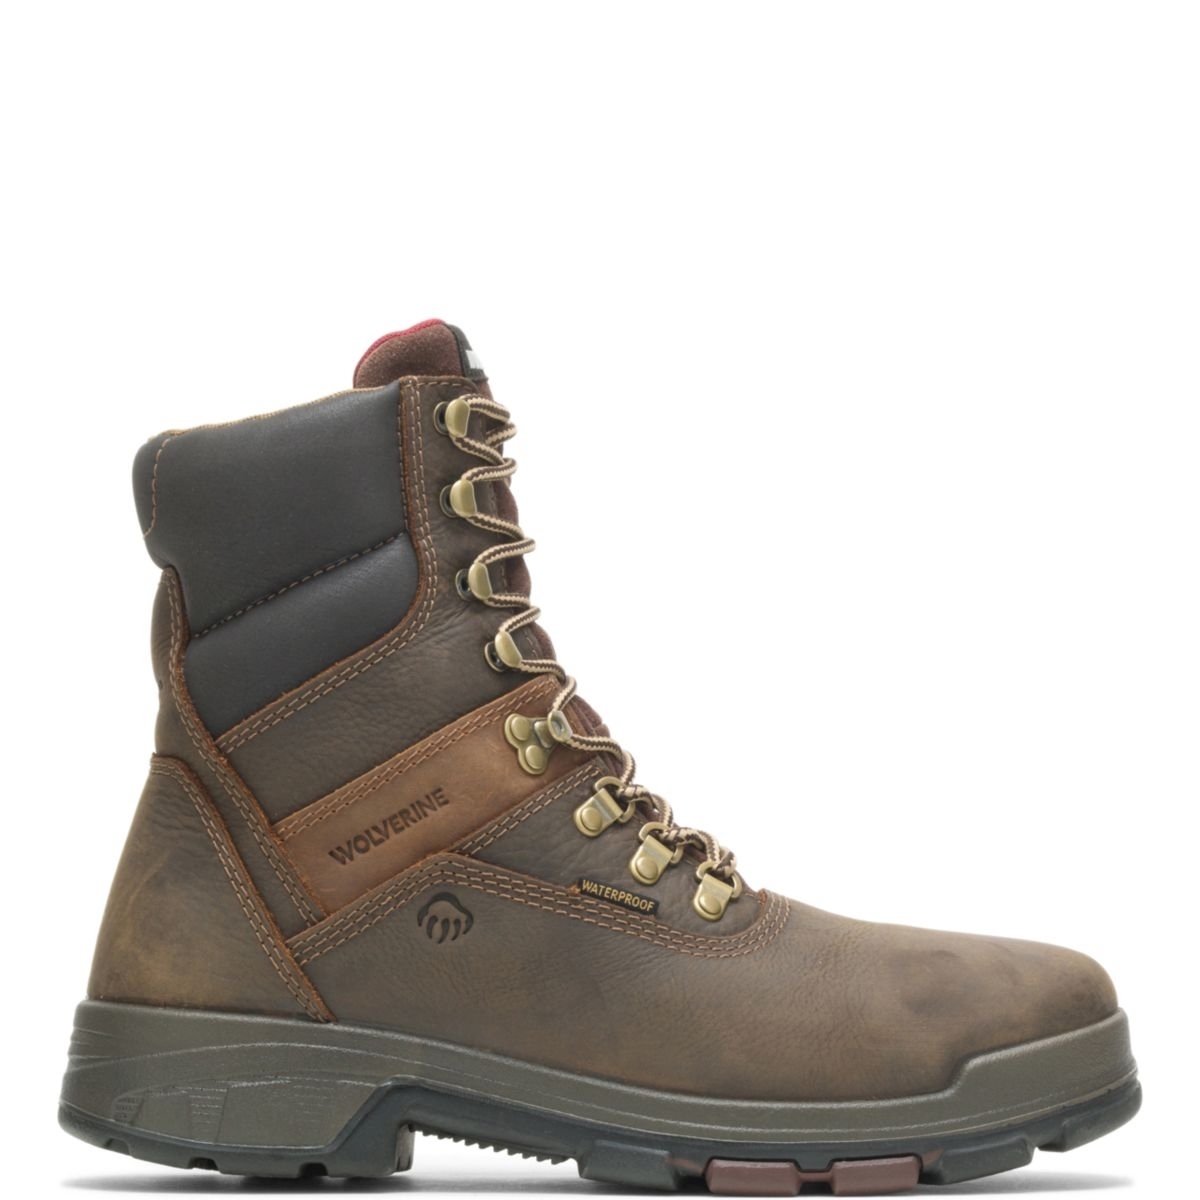 WOLVERINE Men's Cabor EPXÂ® 8 Waterproof Composite Toe Work Boot Dark Brown - W10316 BROWN - BROWN, 7 X-Wide